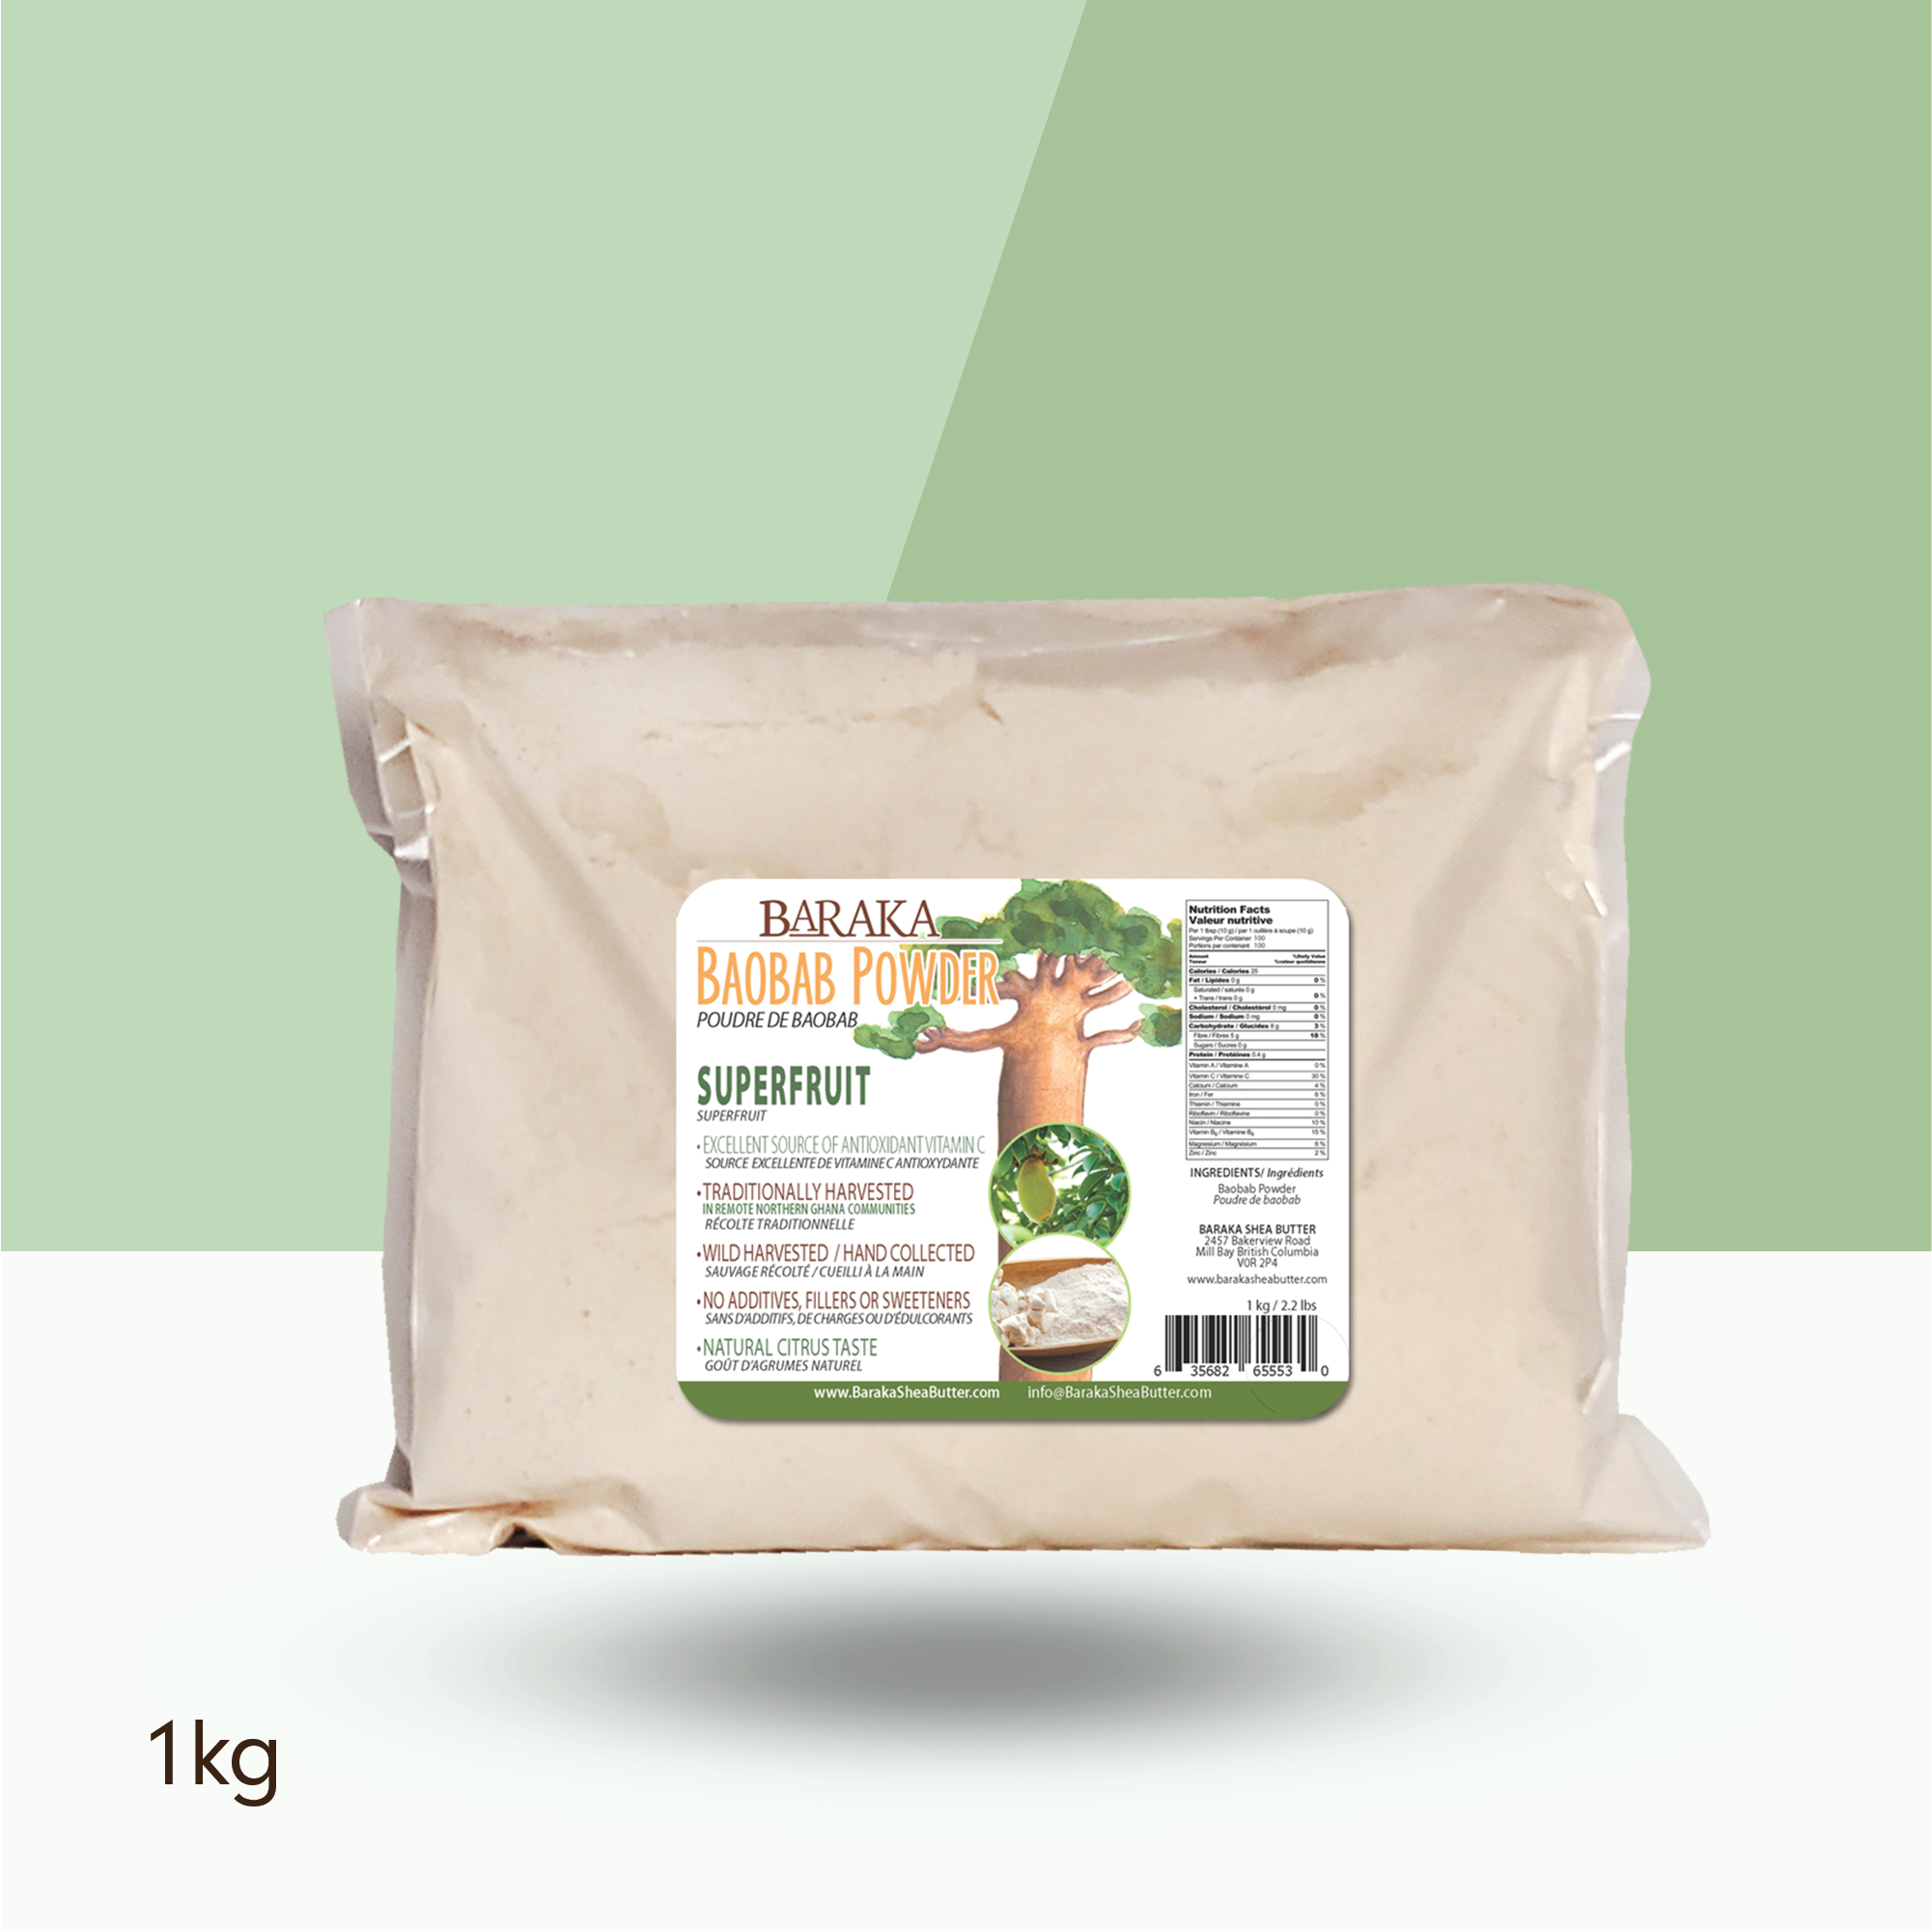 Baraka Baobab Powder 2.2 lb 1 kg